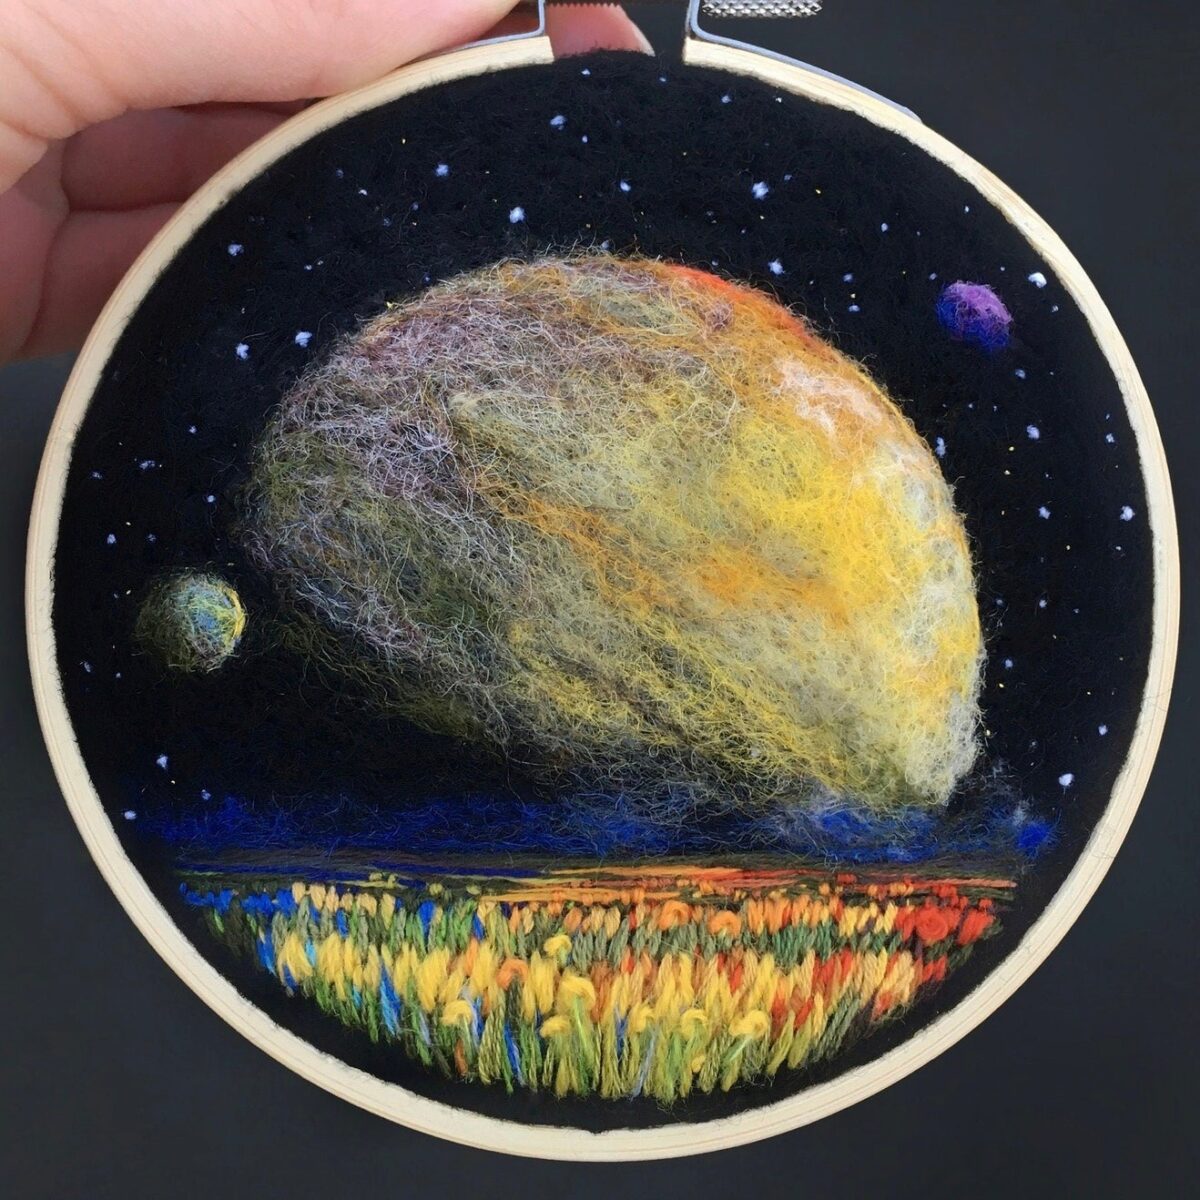 Lush Night Sky Landscape Needle Felted And Embroidered Art Hoops By Yuliya Krishchik 5